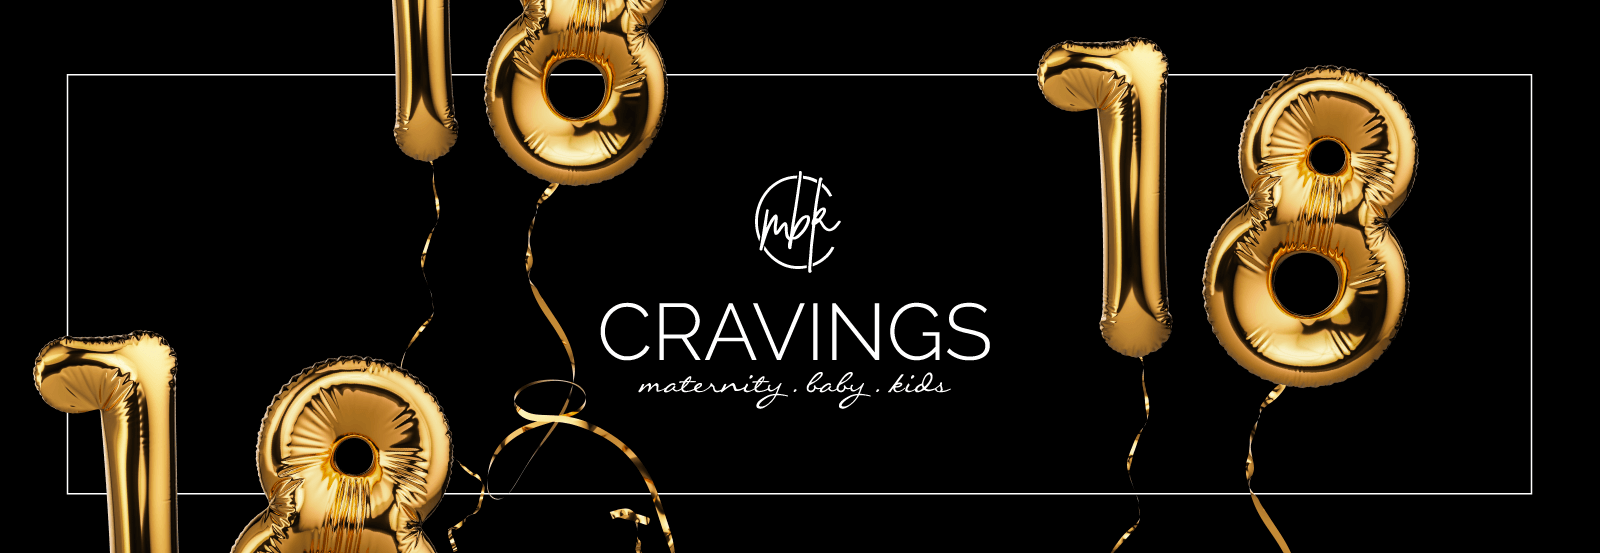 cravings-18th-birthday-giveaway-header